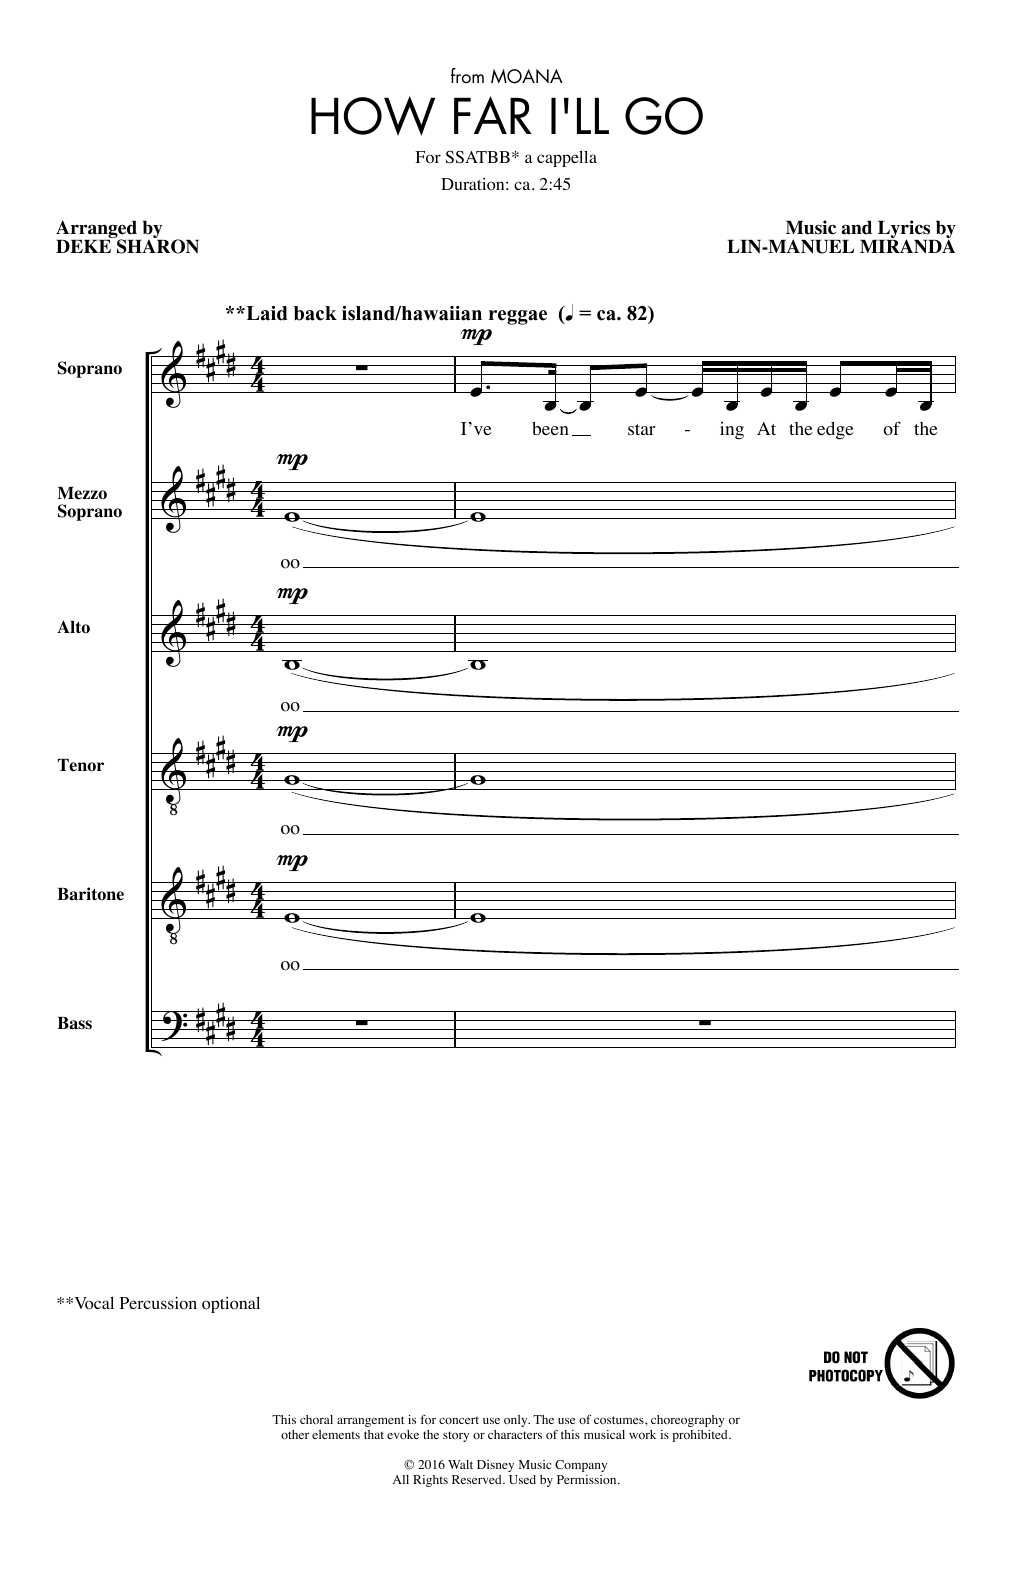 Lin-Manuel Miranda How Far I'll Go (from Moana) (arr. Deke Sharon) Sheet Music Notes & Chords for SATB Choir - Download or Print PDF